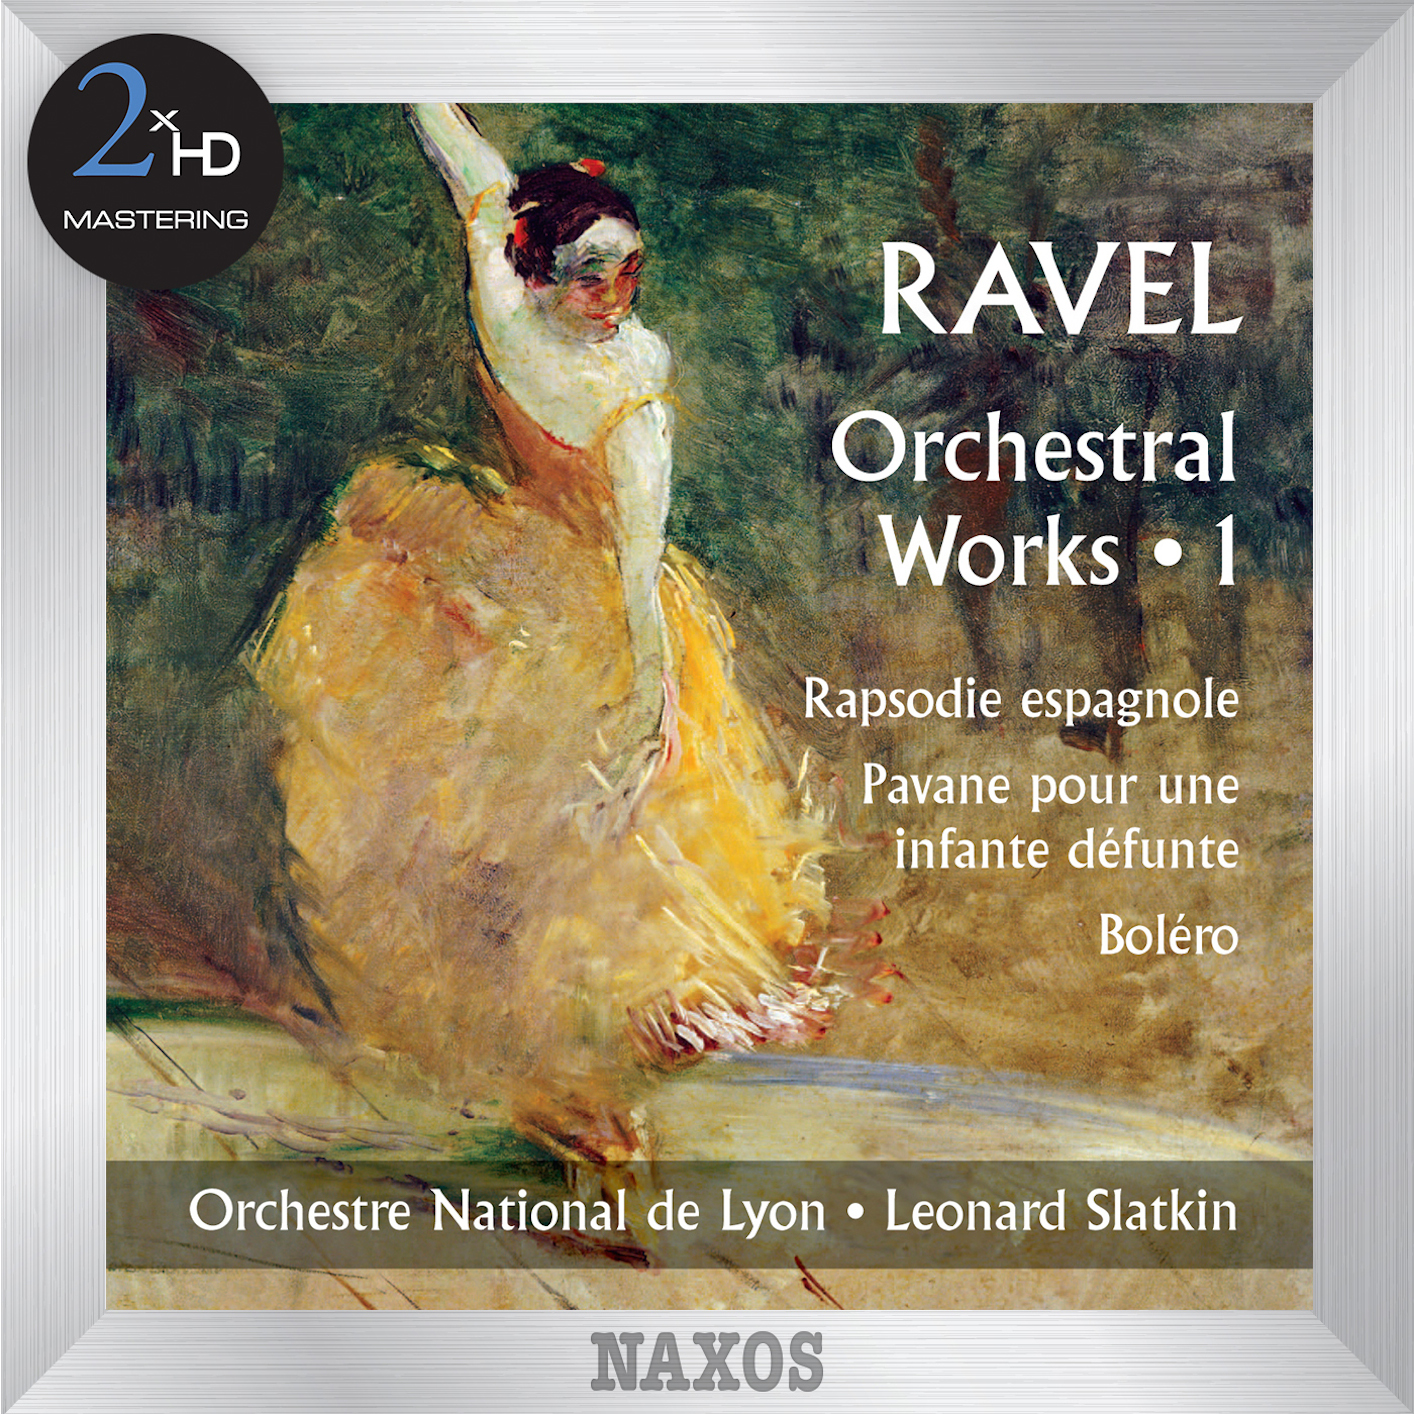 Lyon National Orchestra & Leonard Slatkin - Ravel: Orchestral Works, Vol. 1 (2012/2015) [FLAC 24bit/192kHz]